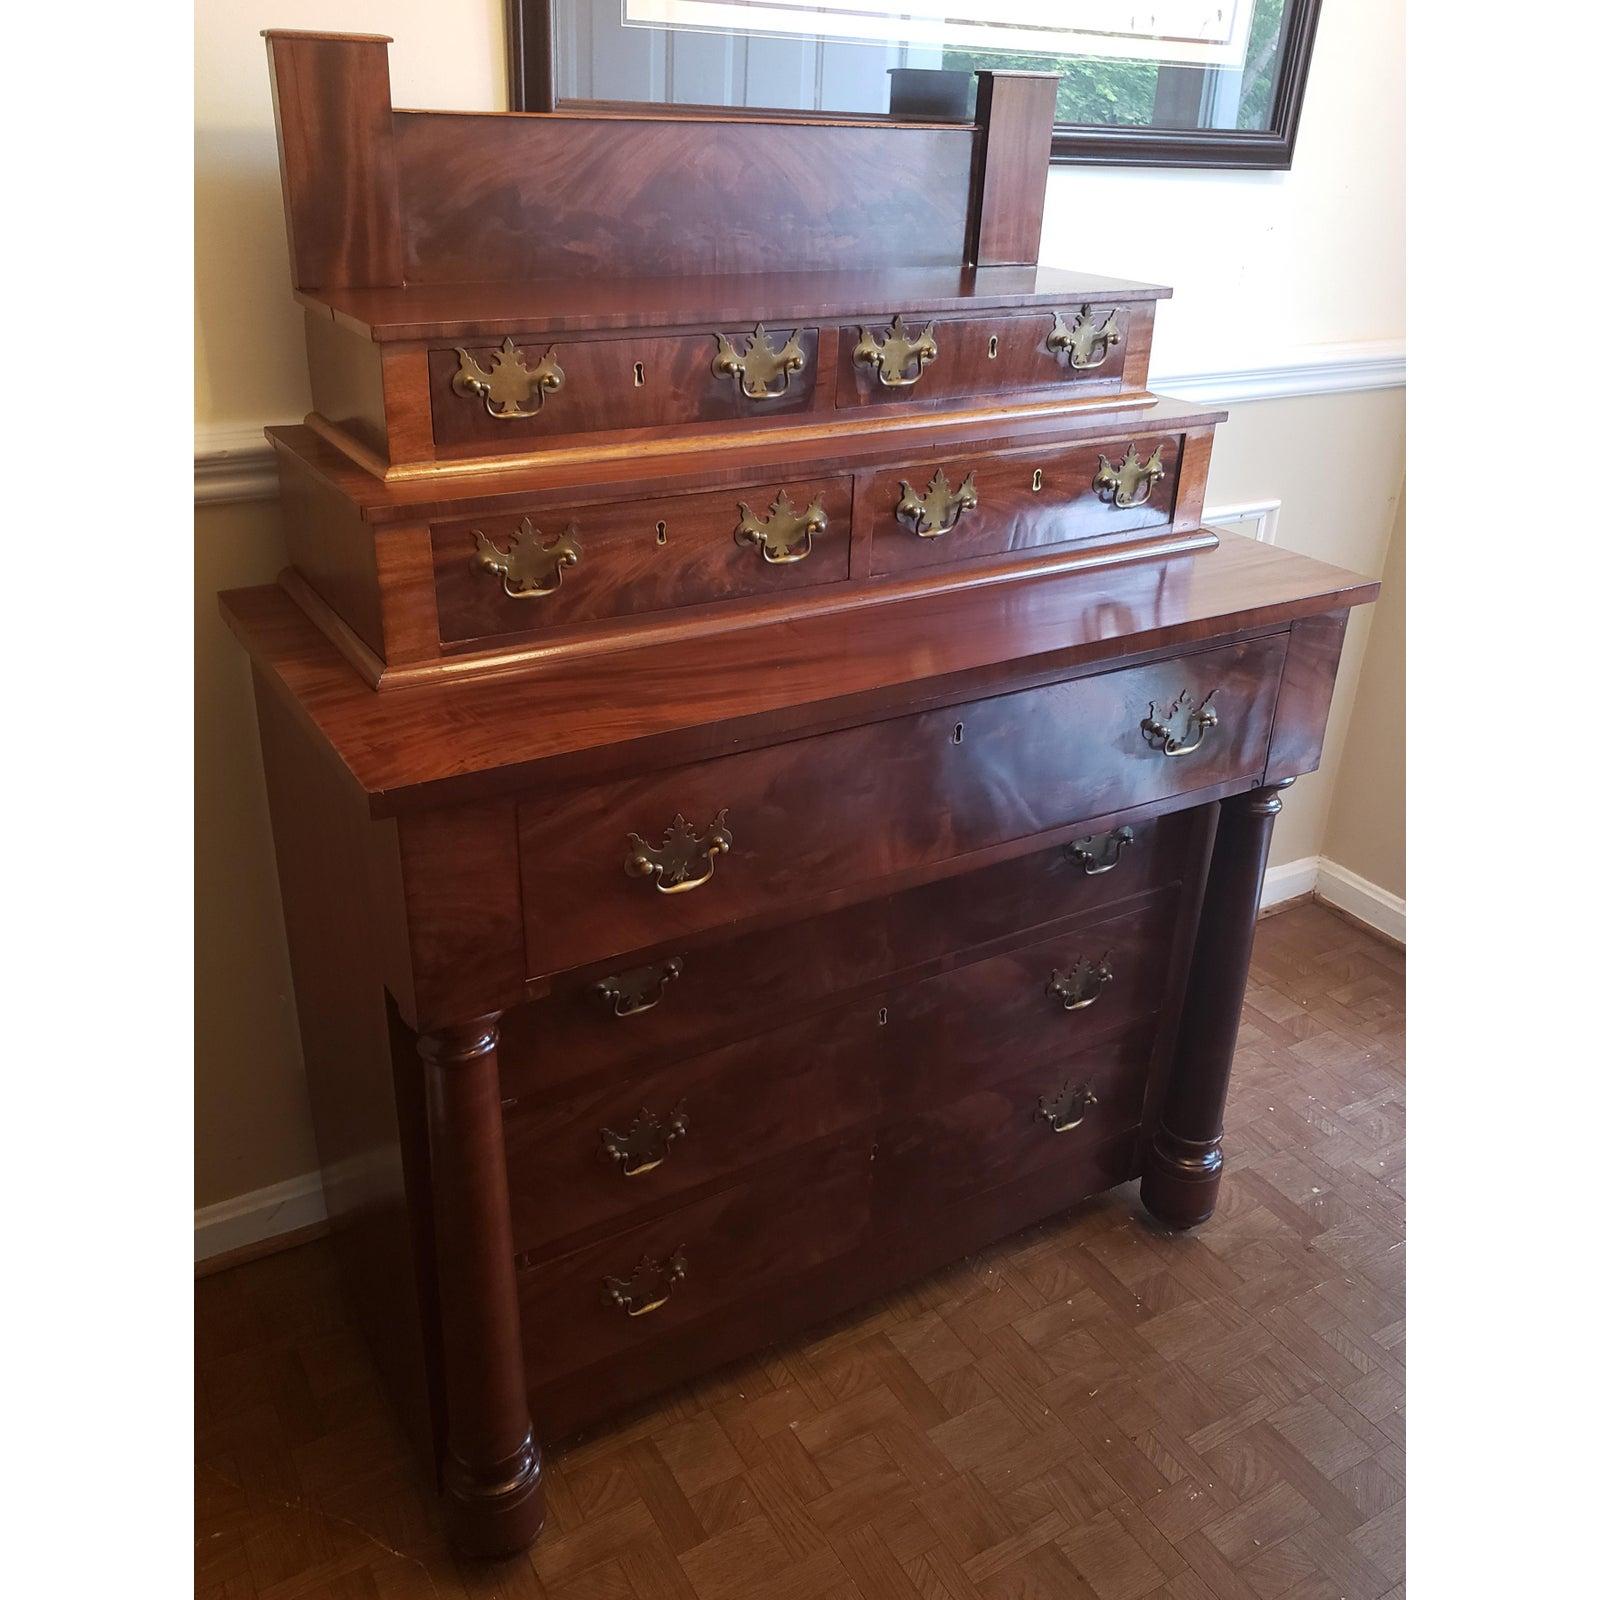 Late 1800s amazing 11 drawers mahogany and walnut burl and burl veneer bureau chest of drawers. Original hardware and detachable top 4 drawers.